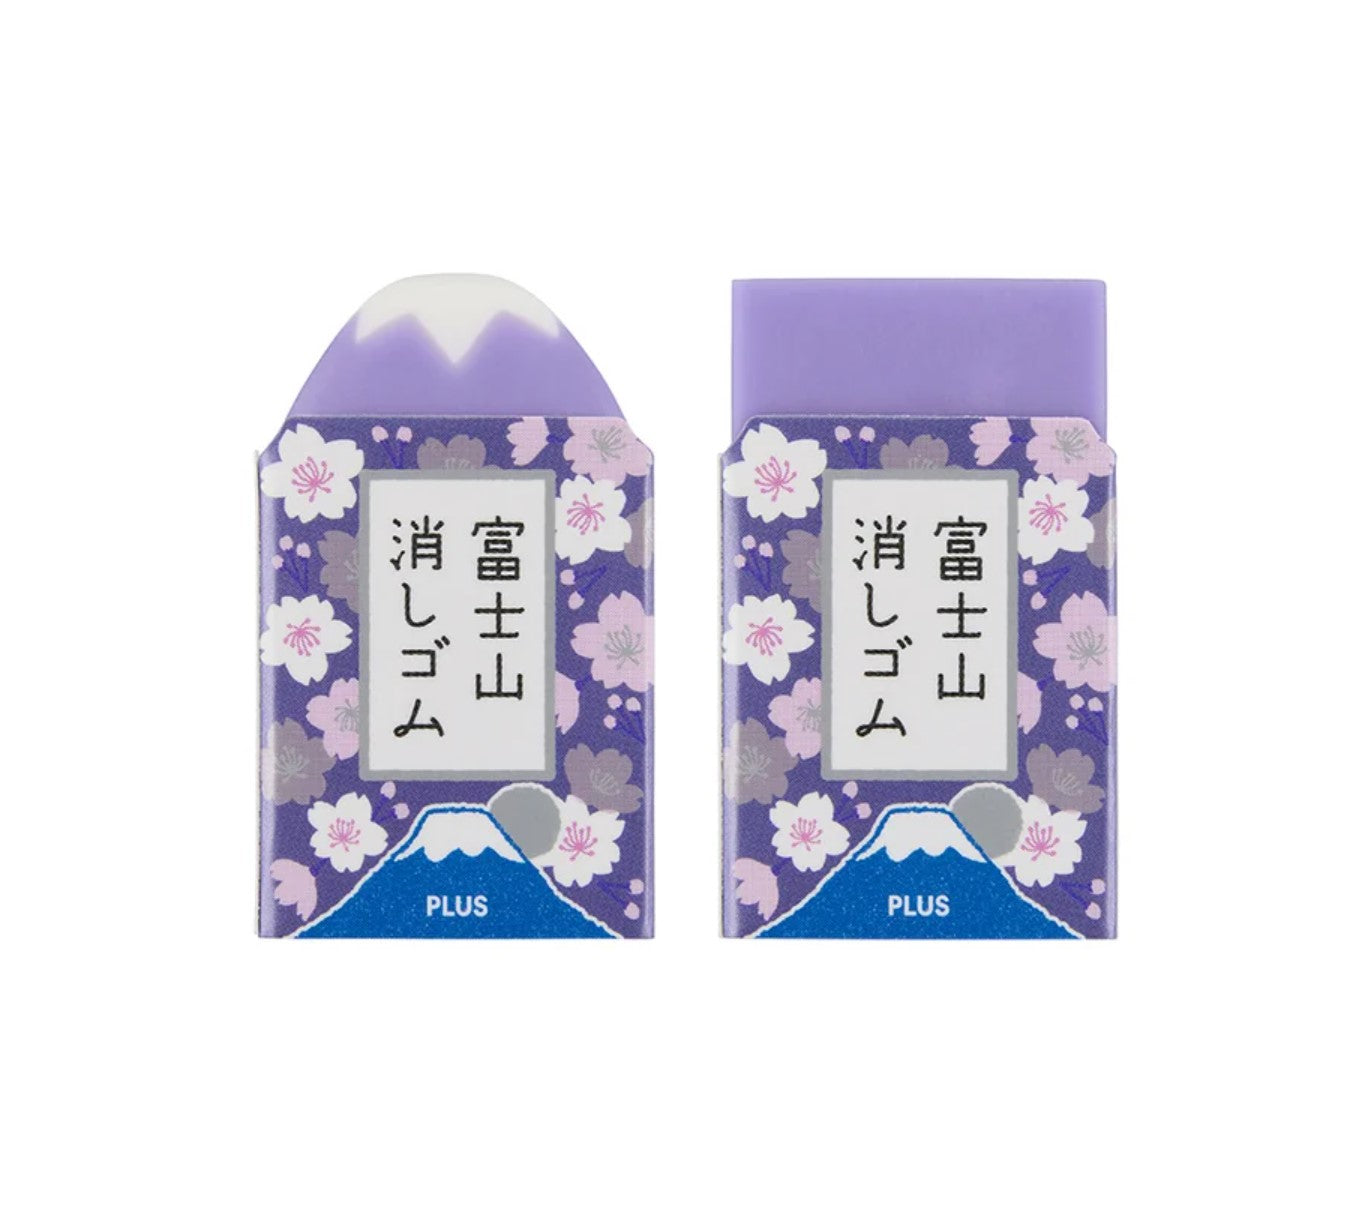 PLUS Mt. Fuji Eraser - Night Cherry Blossoms - Limited Edition Purple